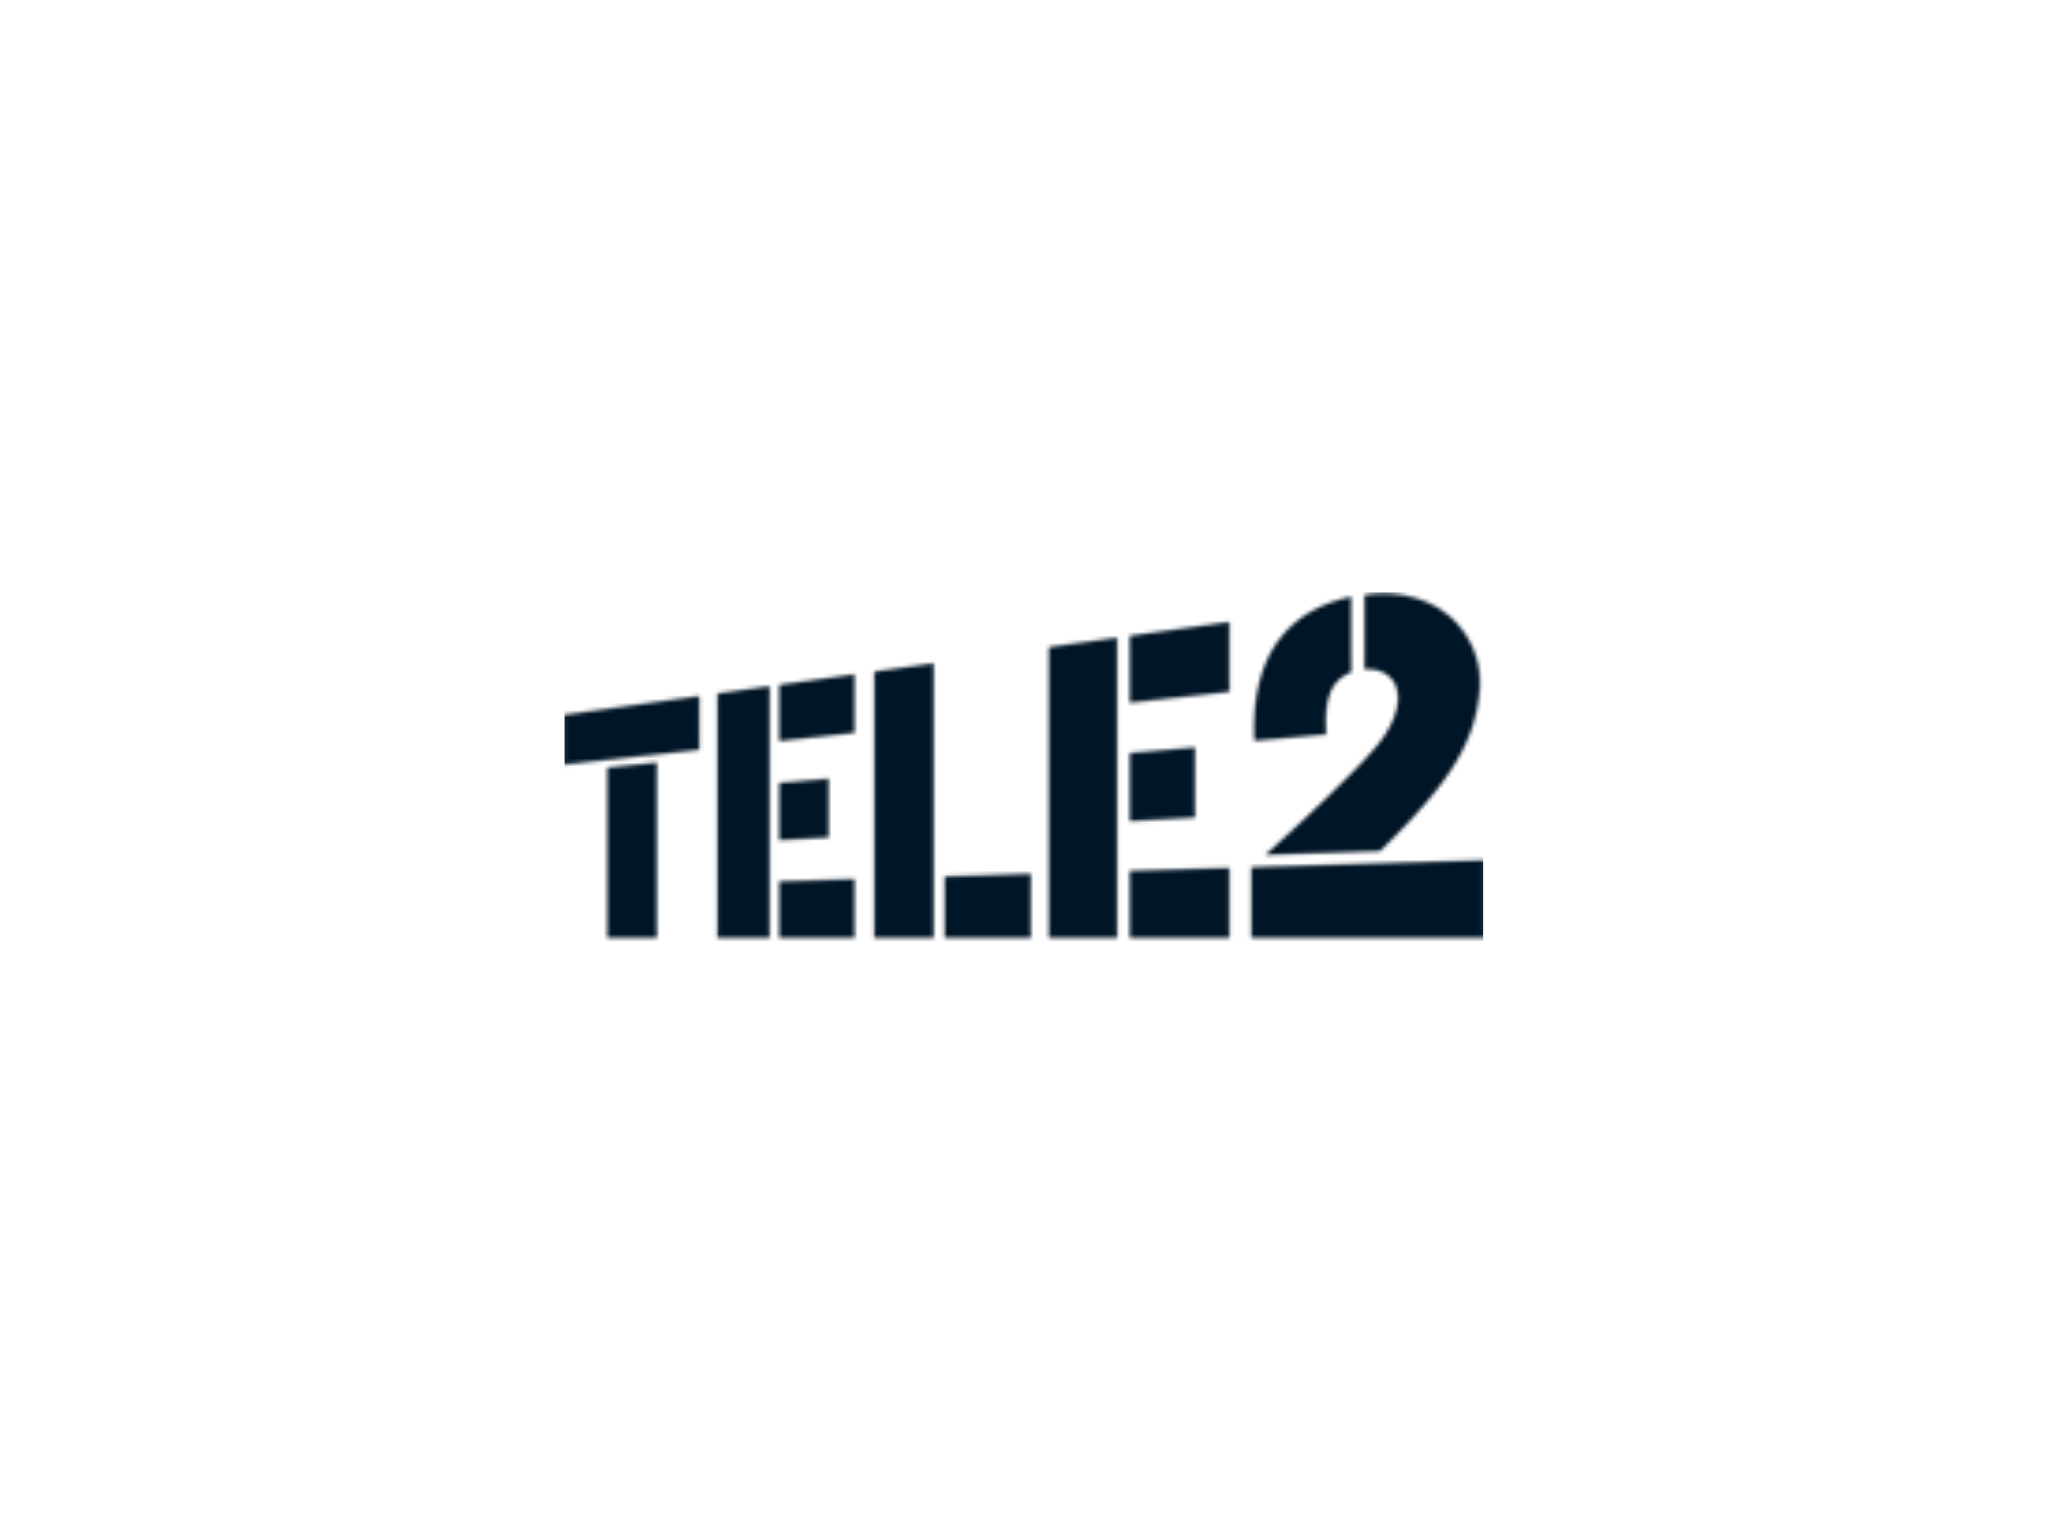 Dark Tele2 logo on transparent background